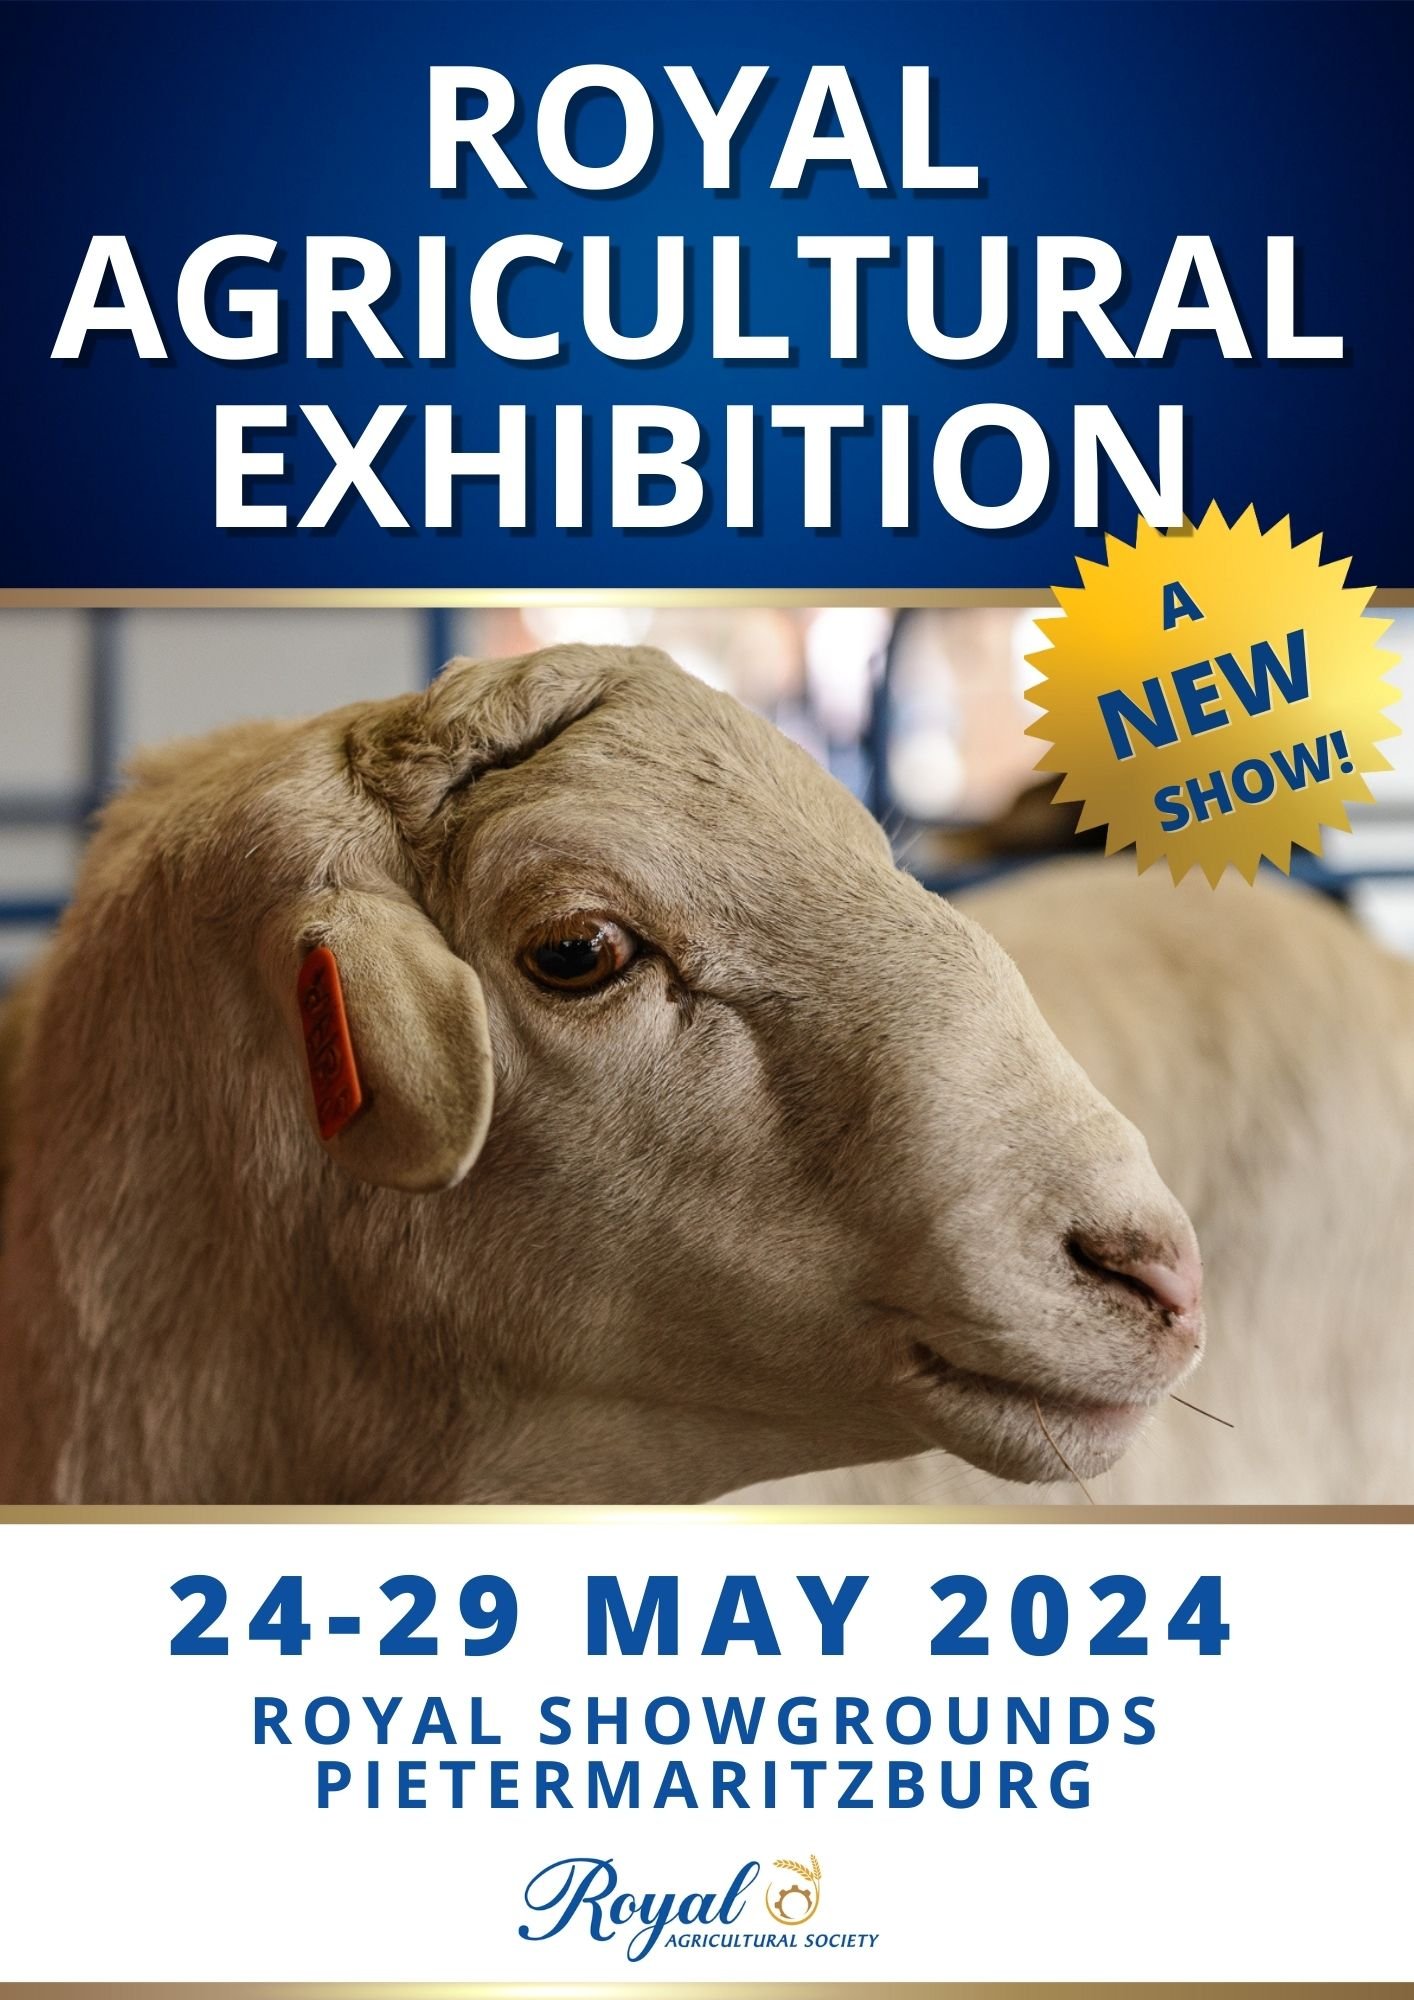 royal-agricultural-exhibition-may-2024-5.jpg